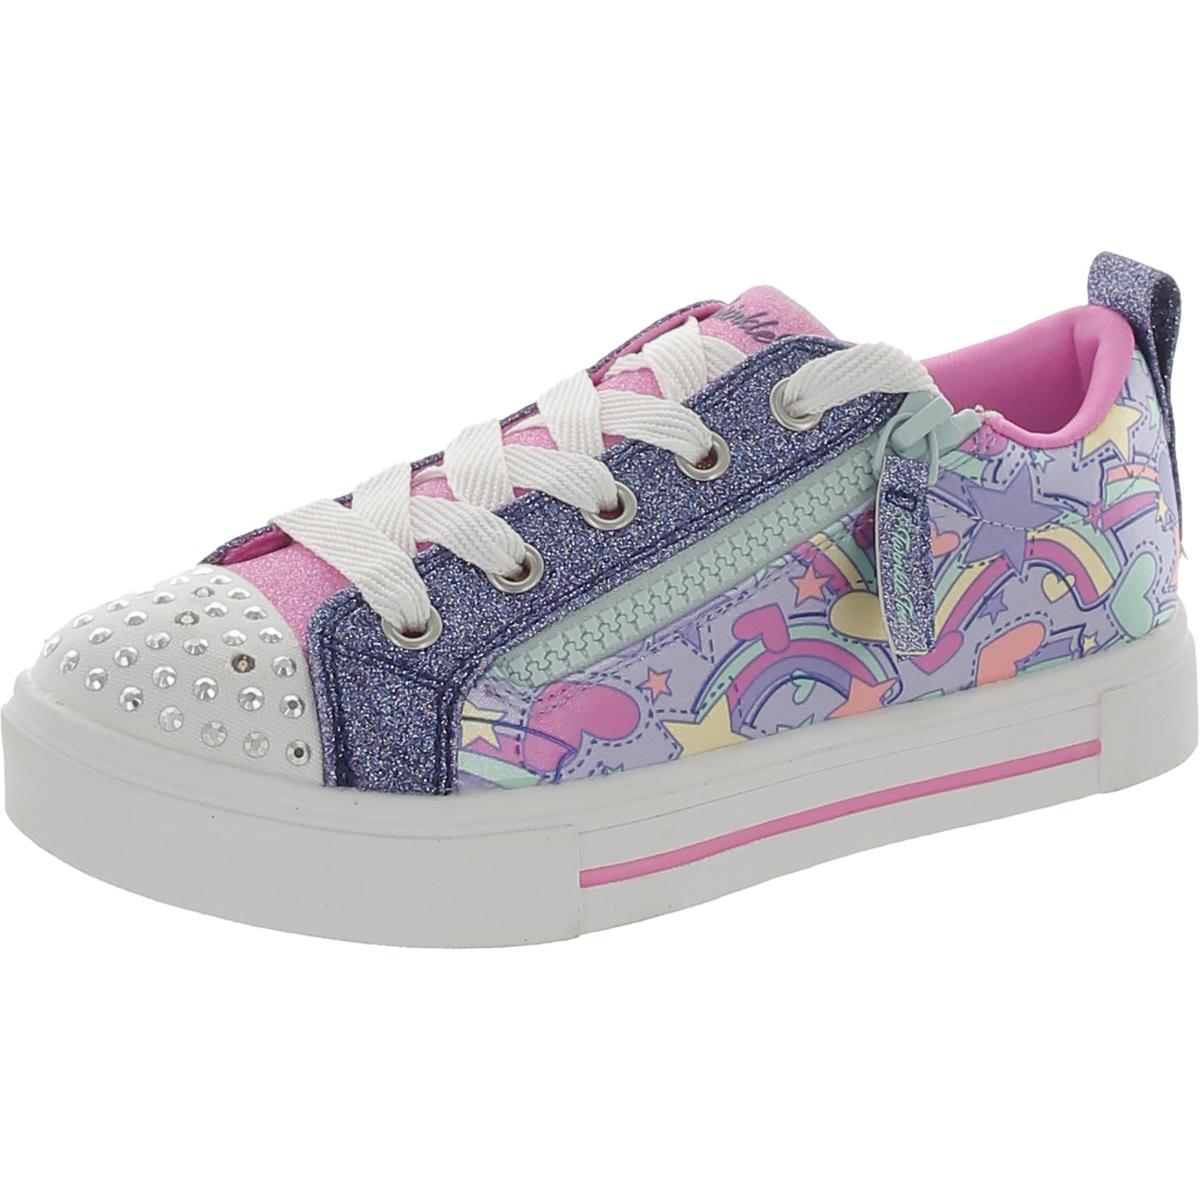 Skechers Twinkle Sparkle Girls Satin Glitter Light-Up Shoes